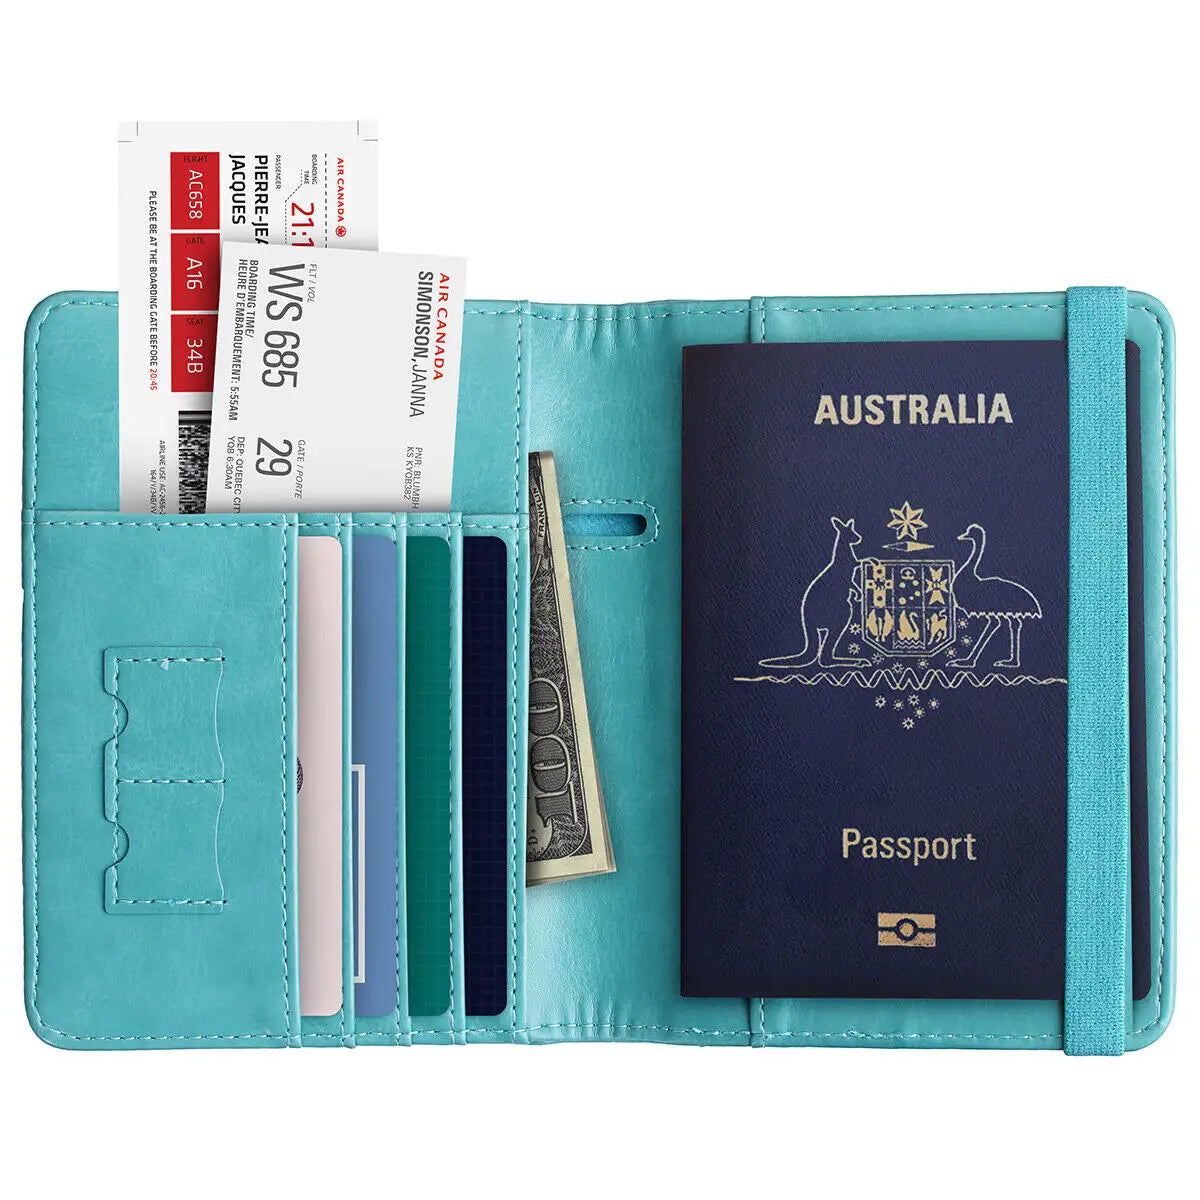 Tiffany blue RFID passport wallet with boarding pass, cash & passport